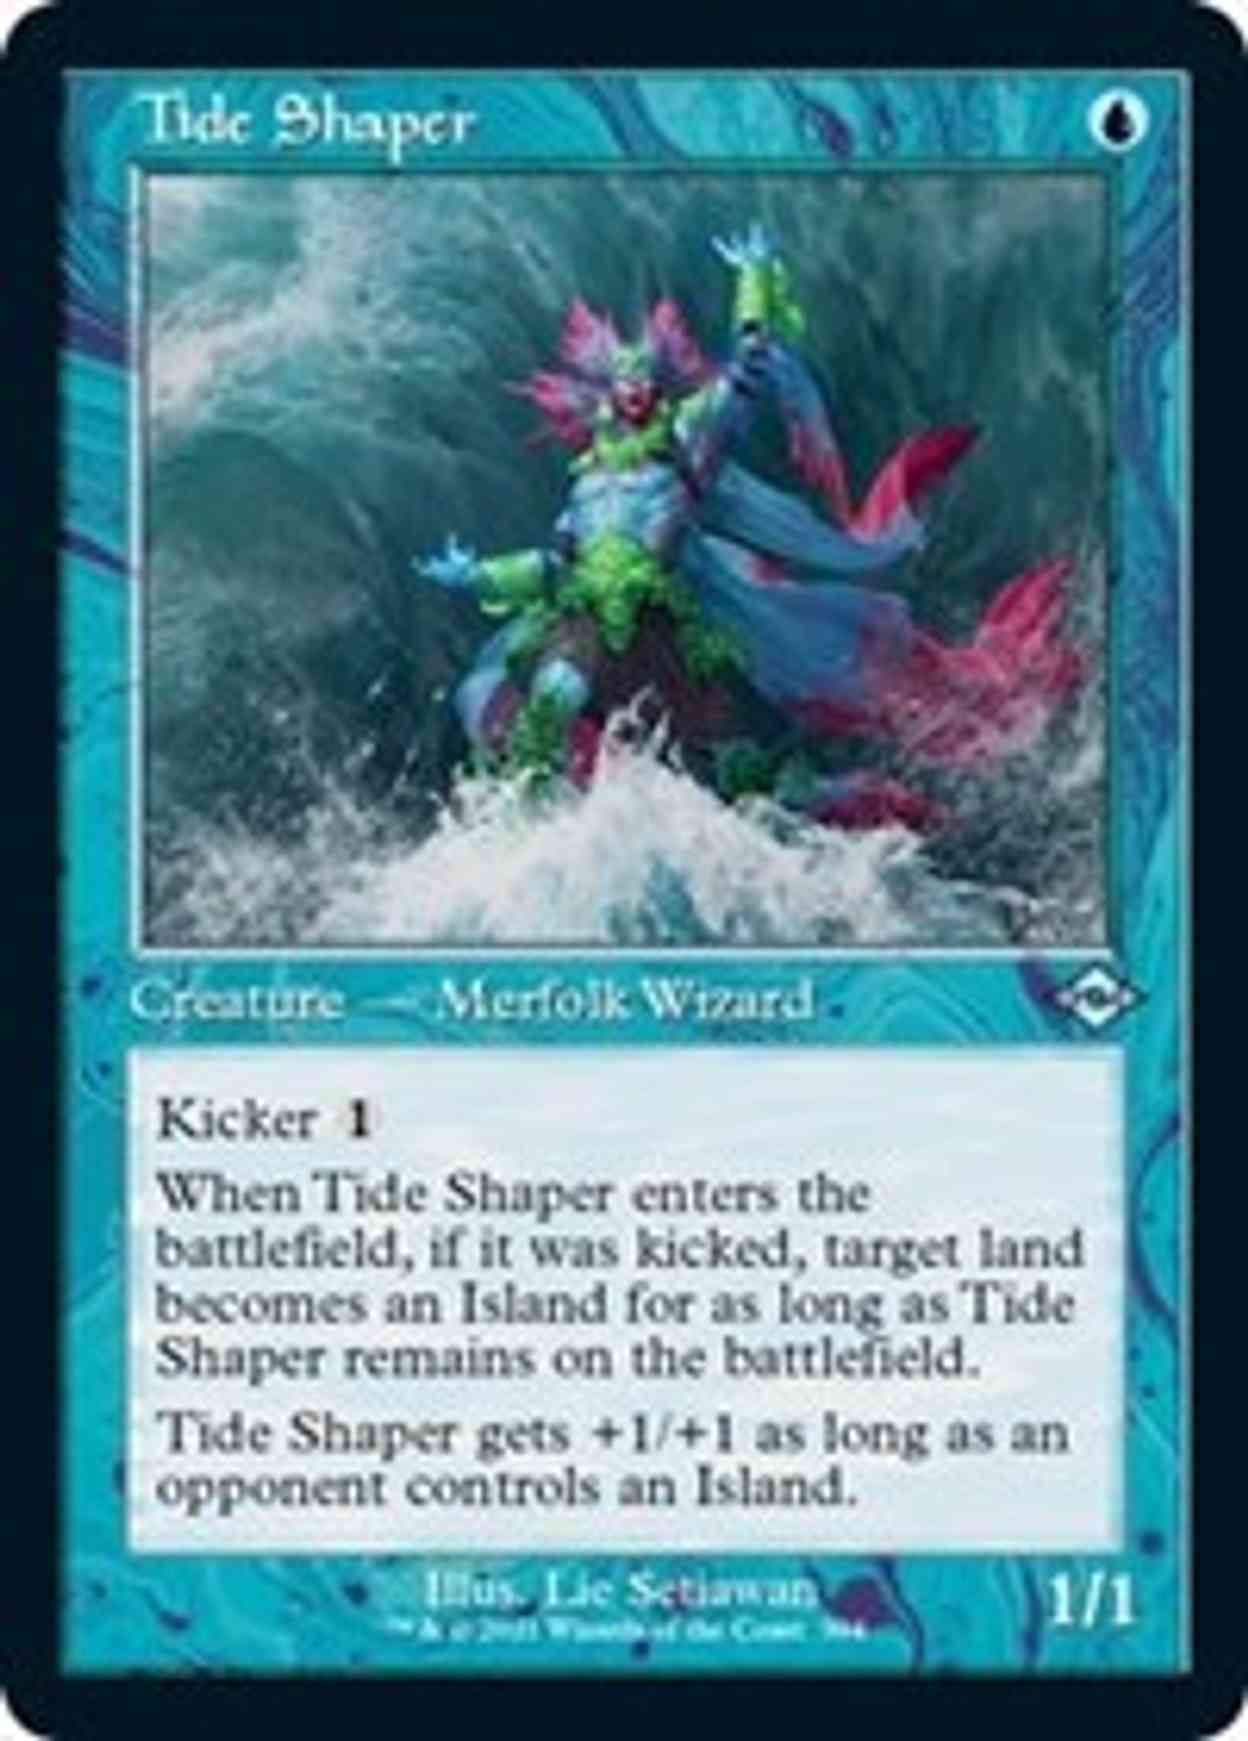 Tide Shaper (Retro Frame) (Foil Etched) magic card front